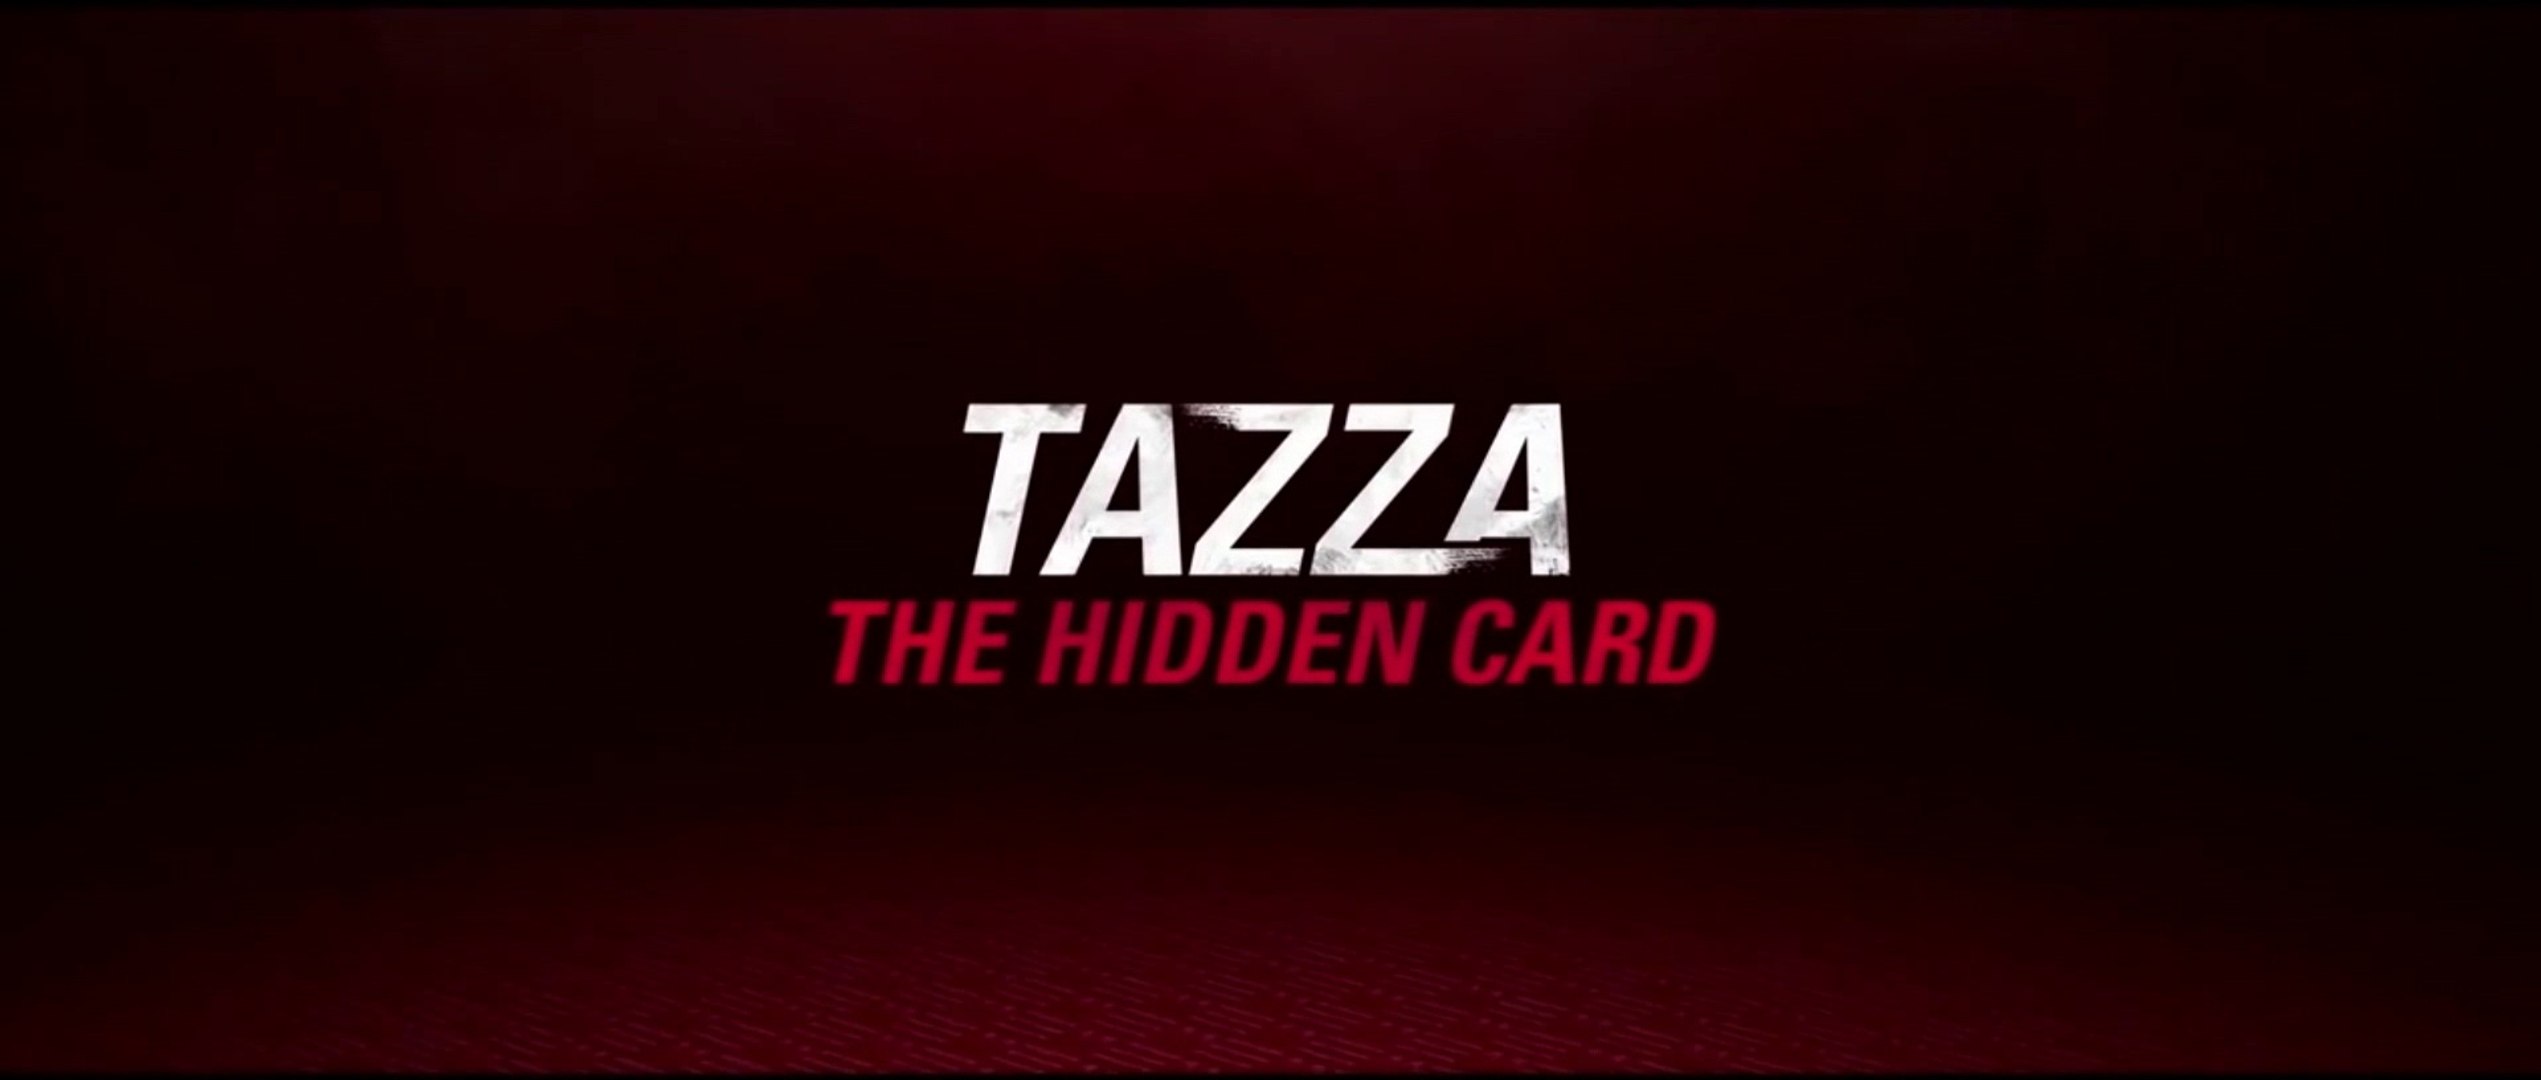 TAZZA - THE HIDDEN CARD (2014) Trailer VOST-ENG - KOREAN - Vidéo Dailymotion